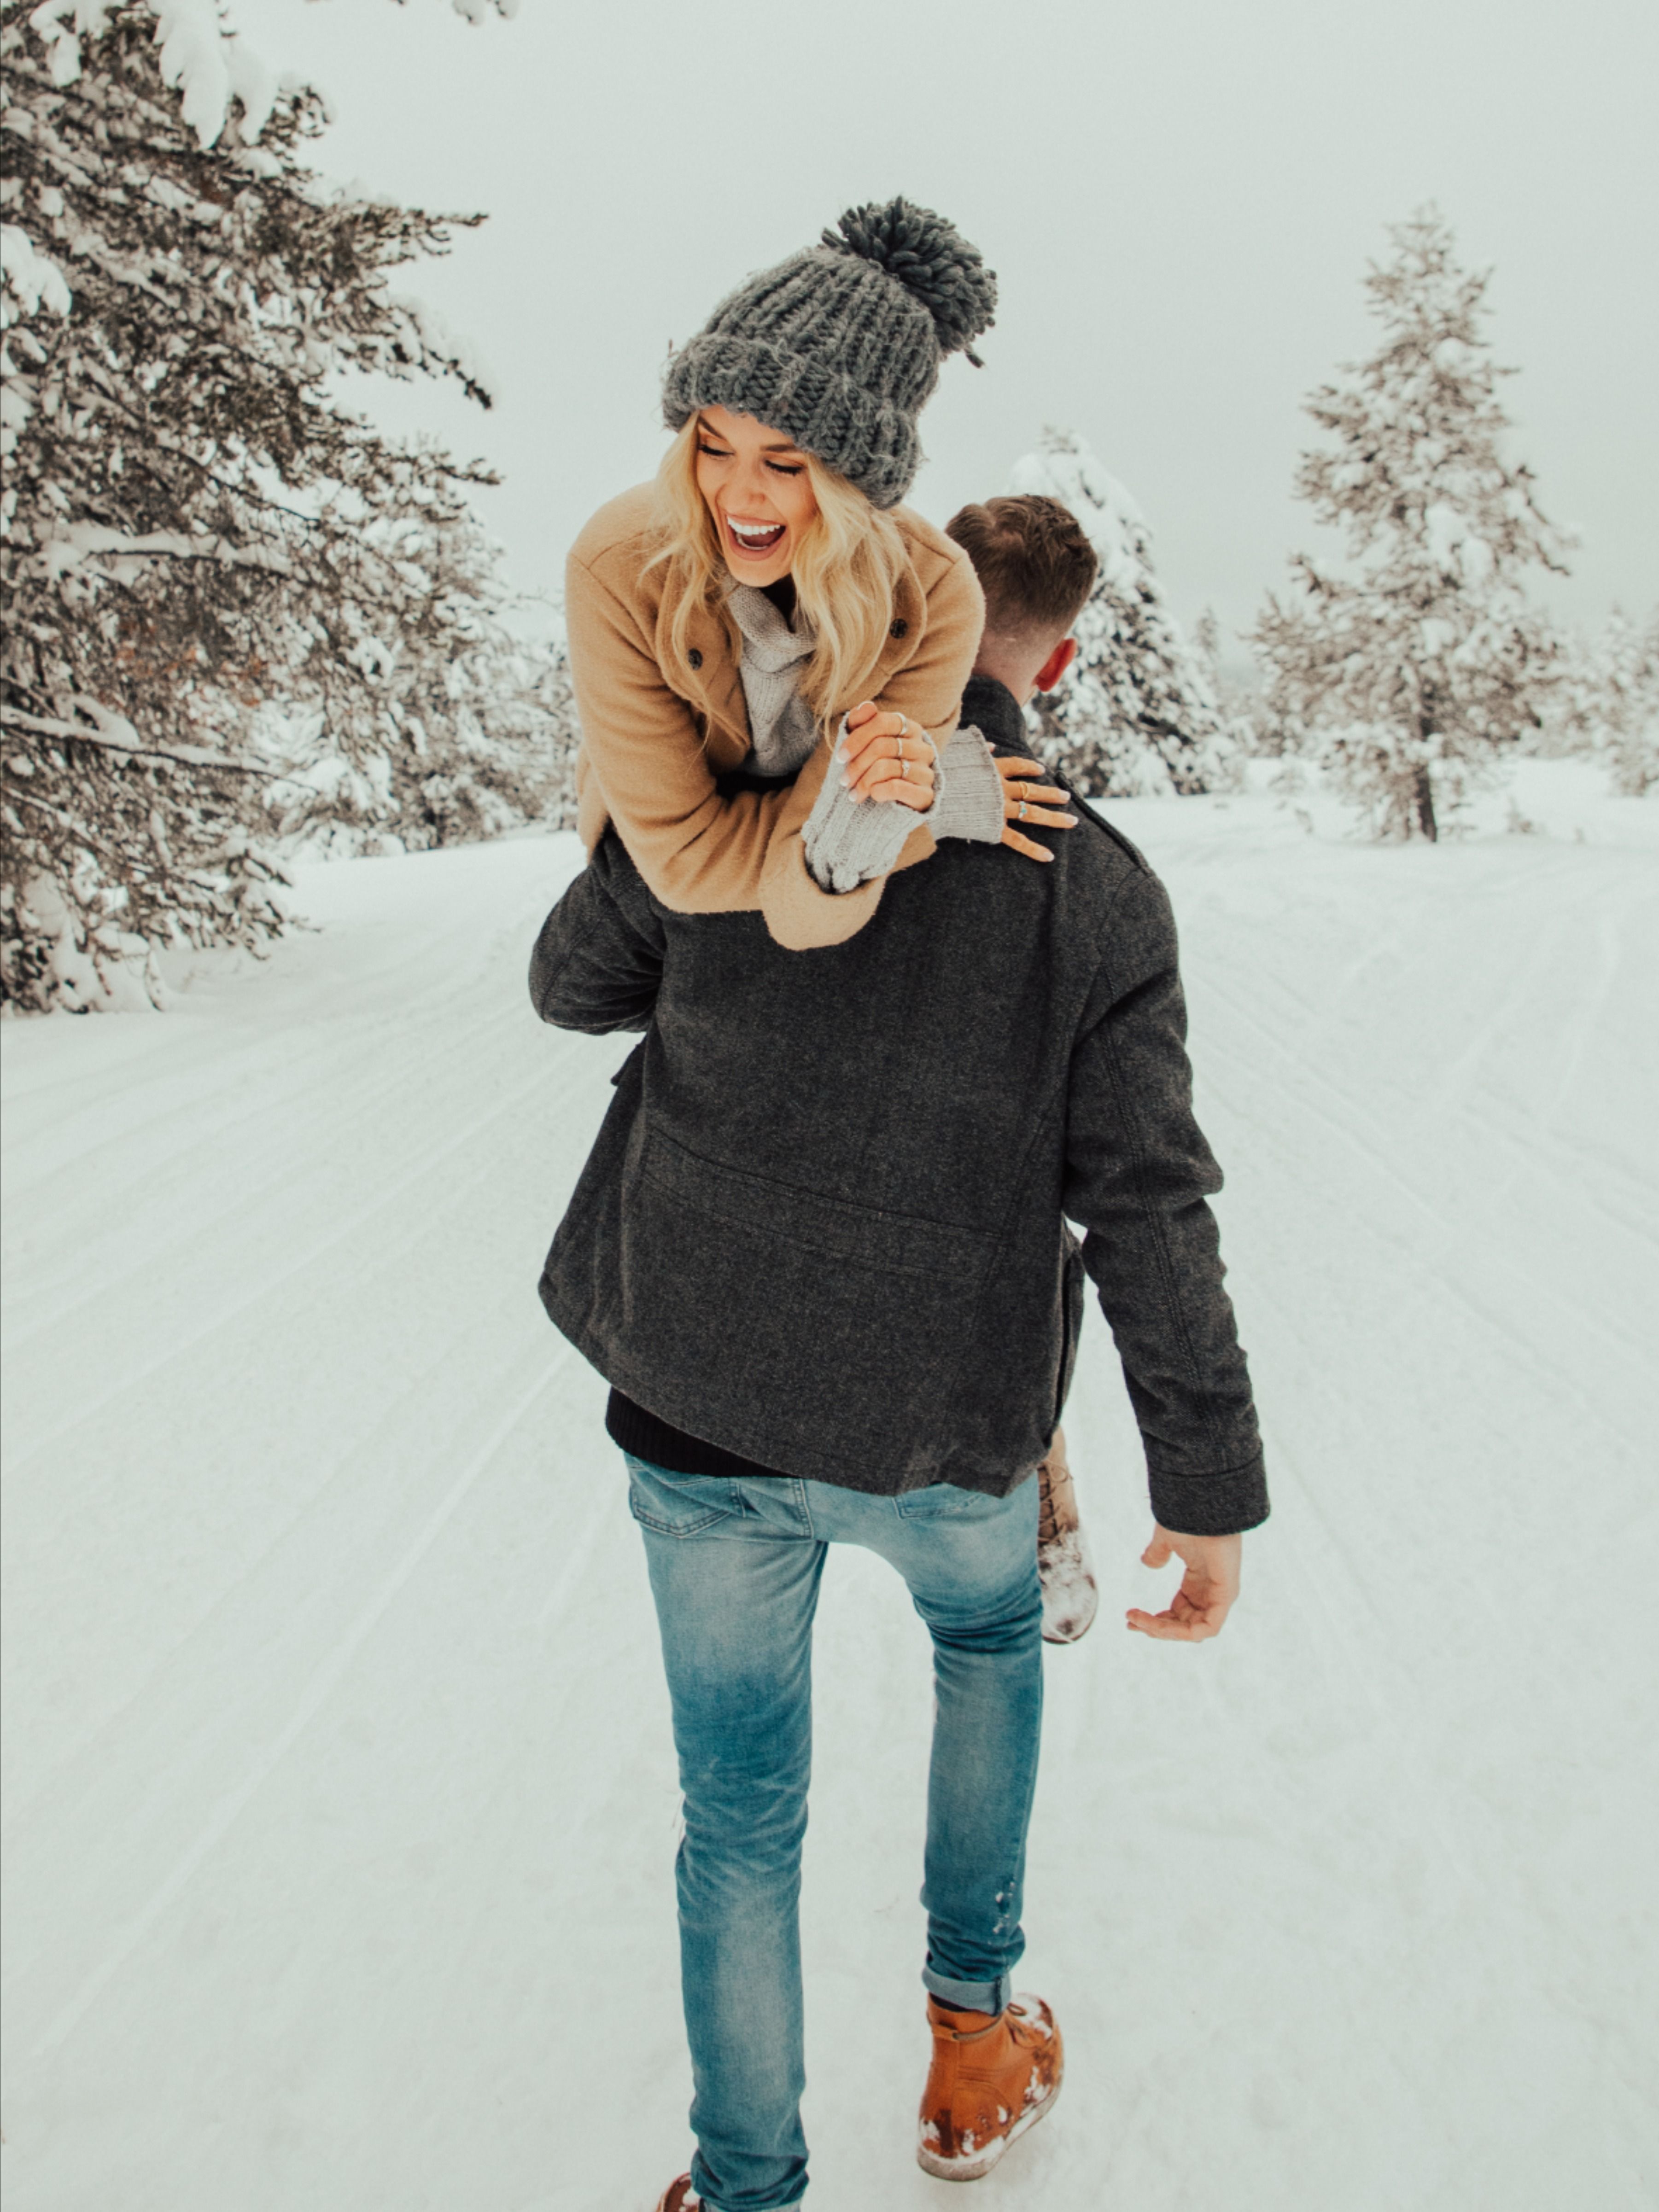 Madison + Kirby | Winter Couples Adventure Session | Island Park Idaho | Amanda Wood Photography -   17 christmas photoshoot couples outfits ideas